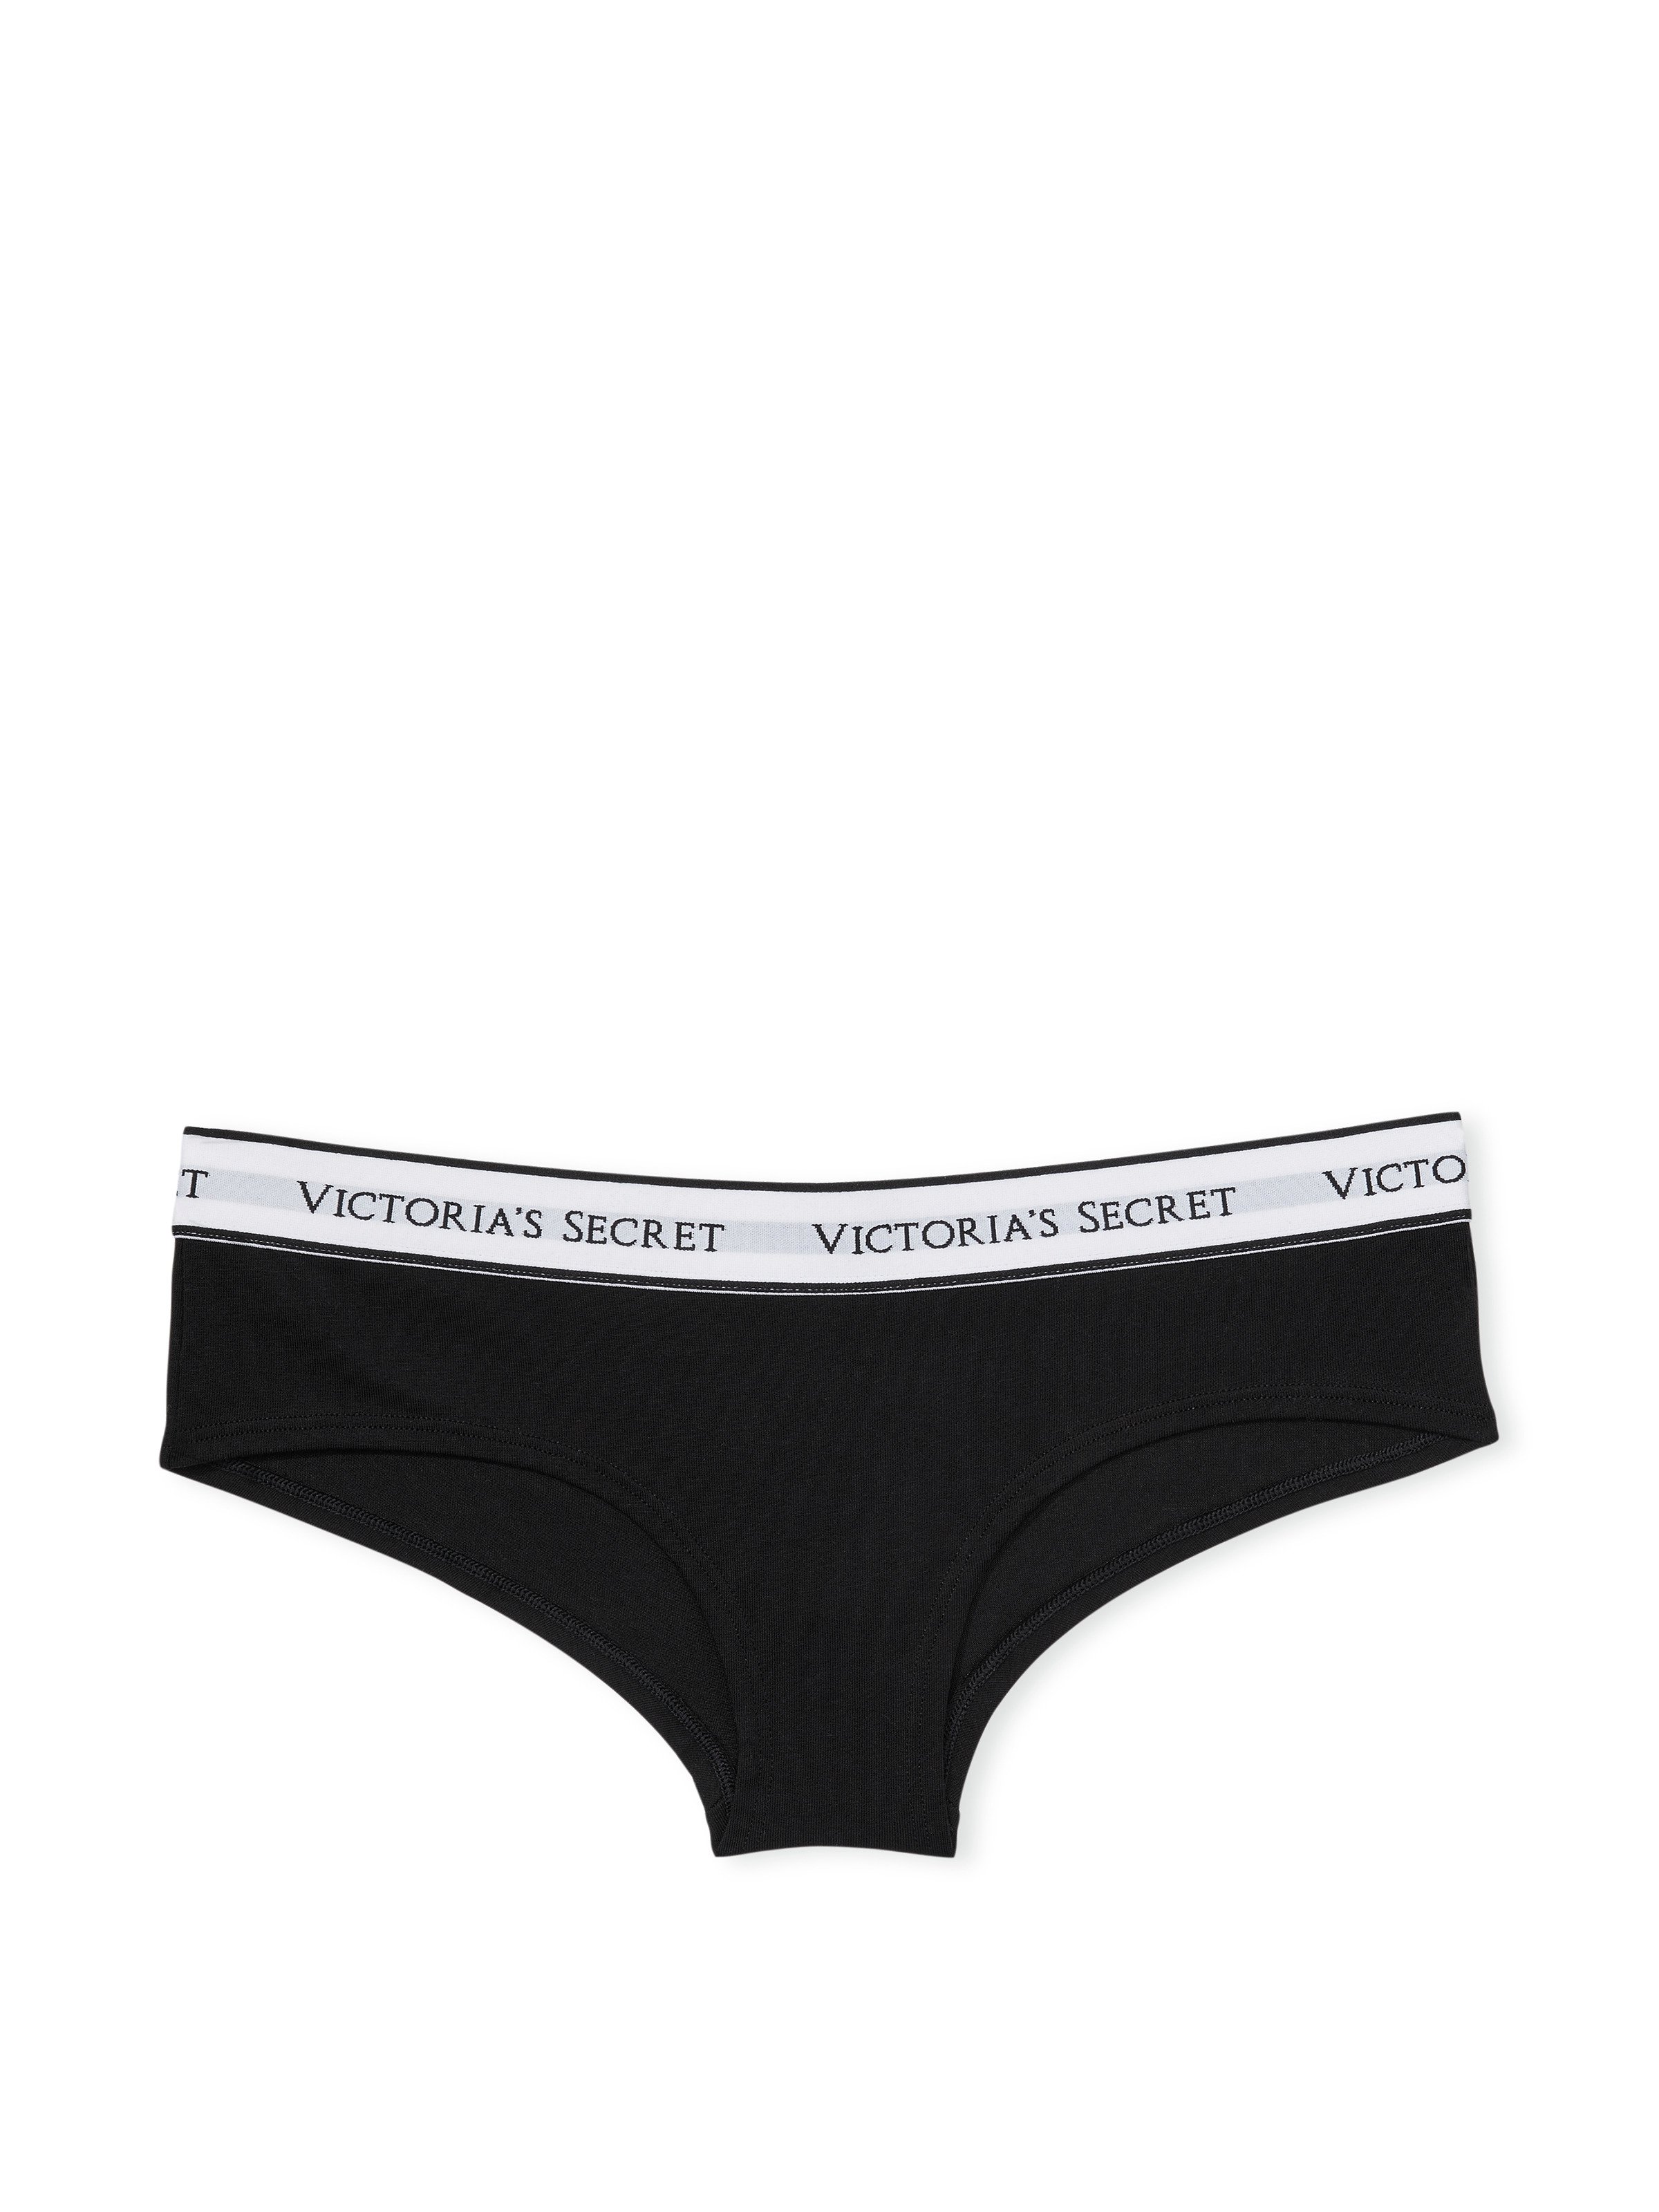 Victoria's Secret Cotton Logo Band Panties Cheeky Panties Set Lot of 3